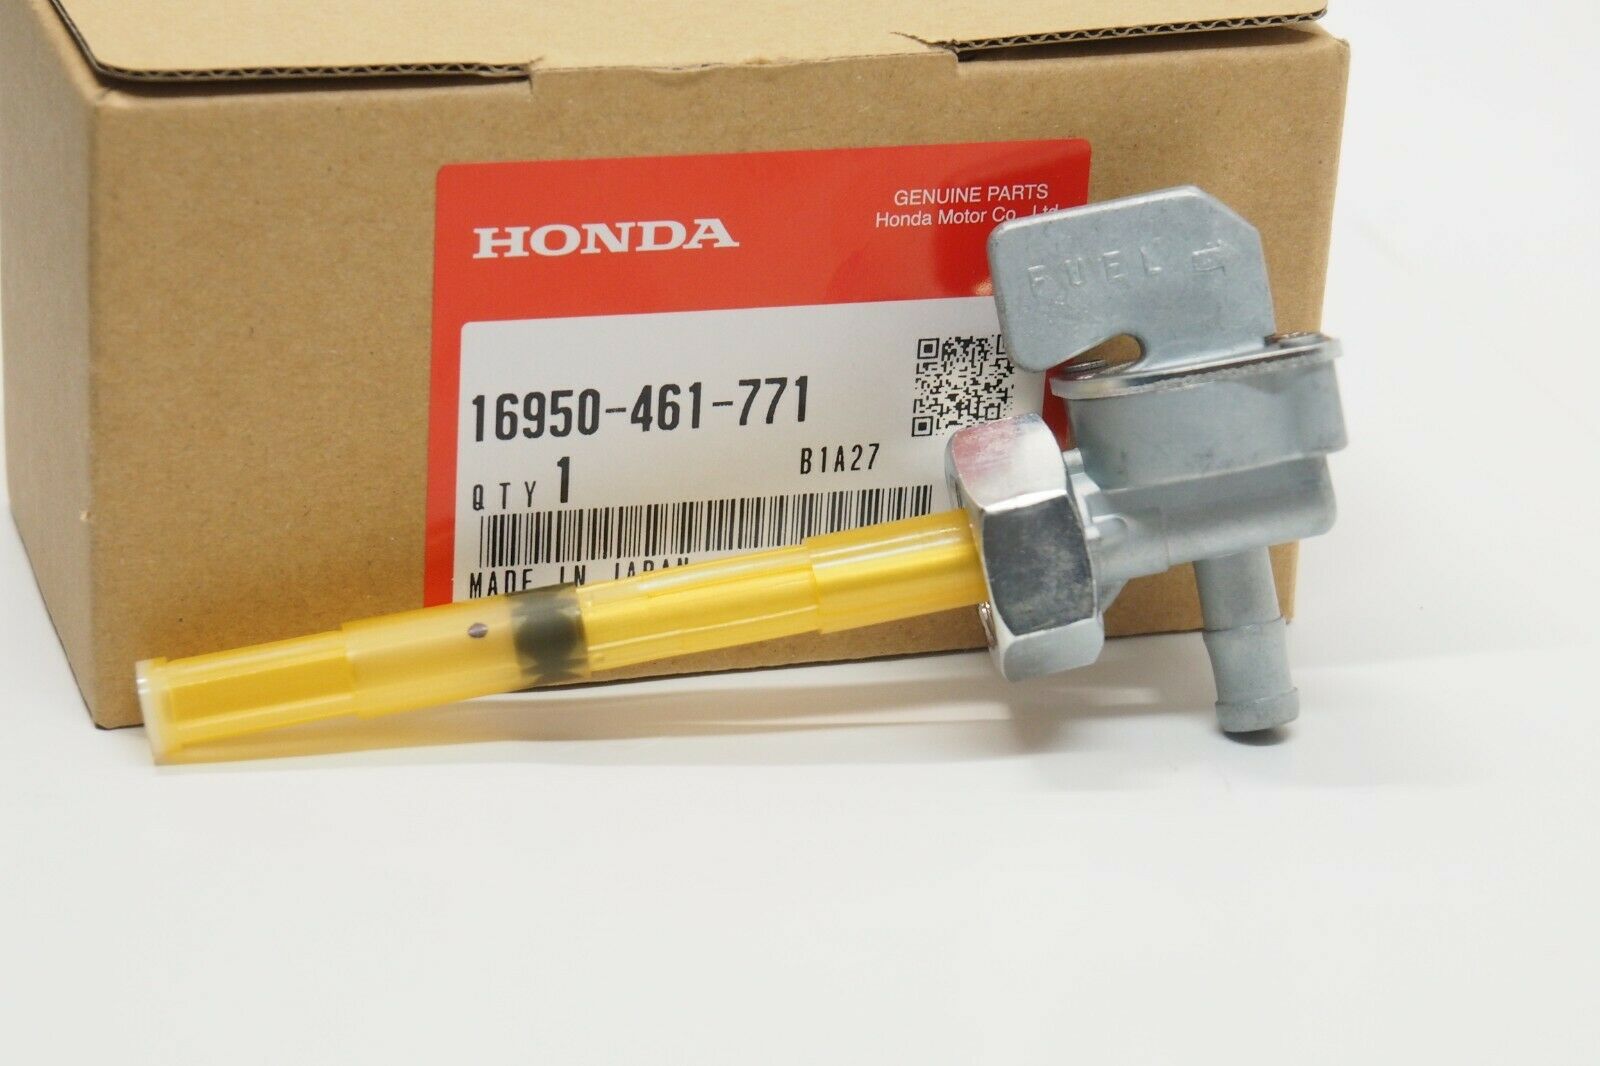 HONDA  GenuineParts Fuel Petcock for CB650 750 900 Custom 1981 16950-461-771 ★